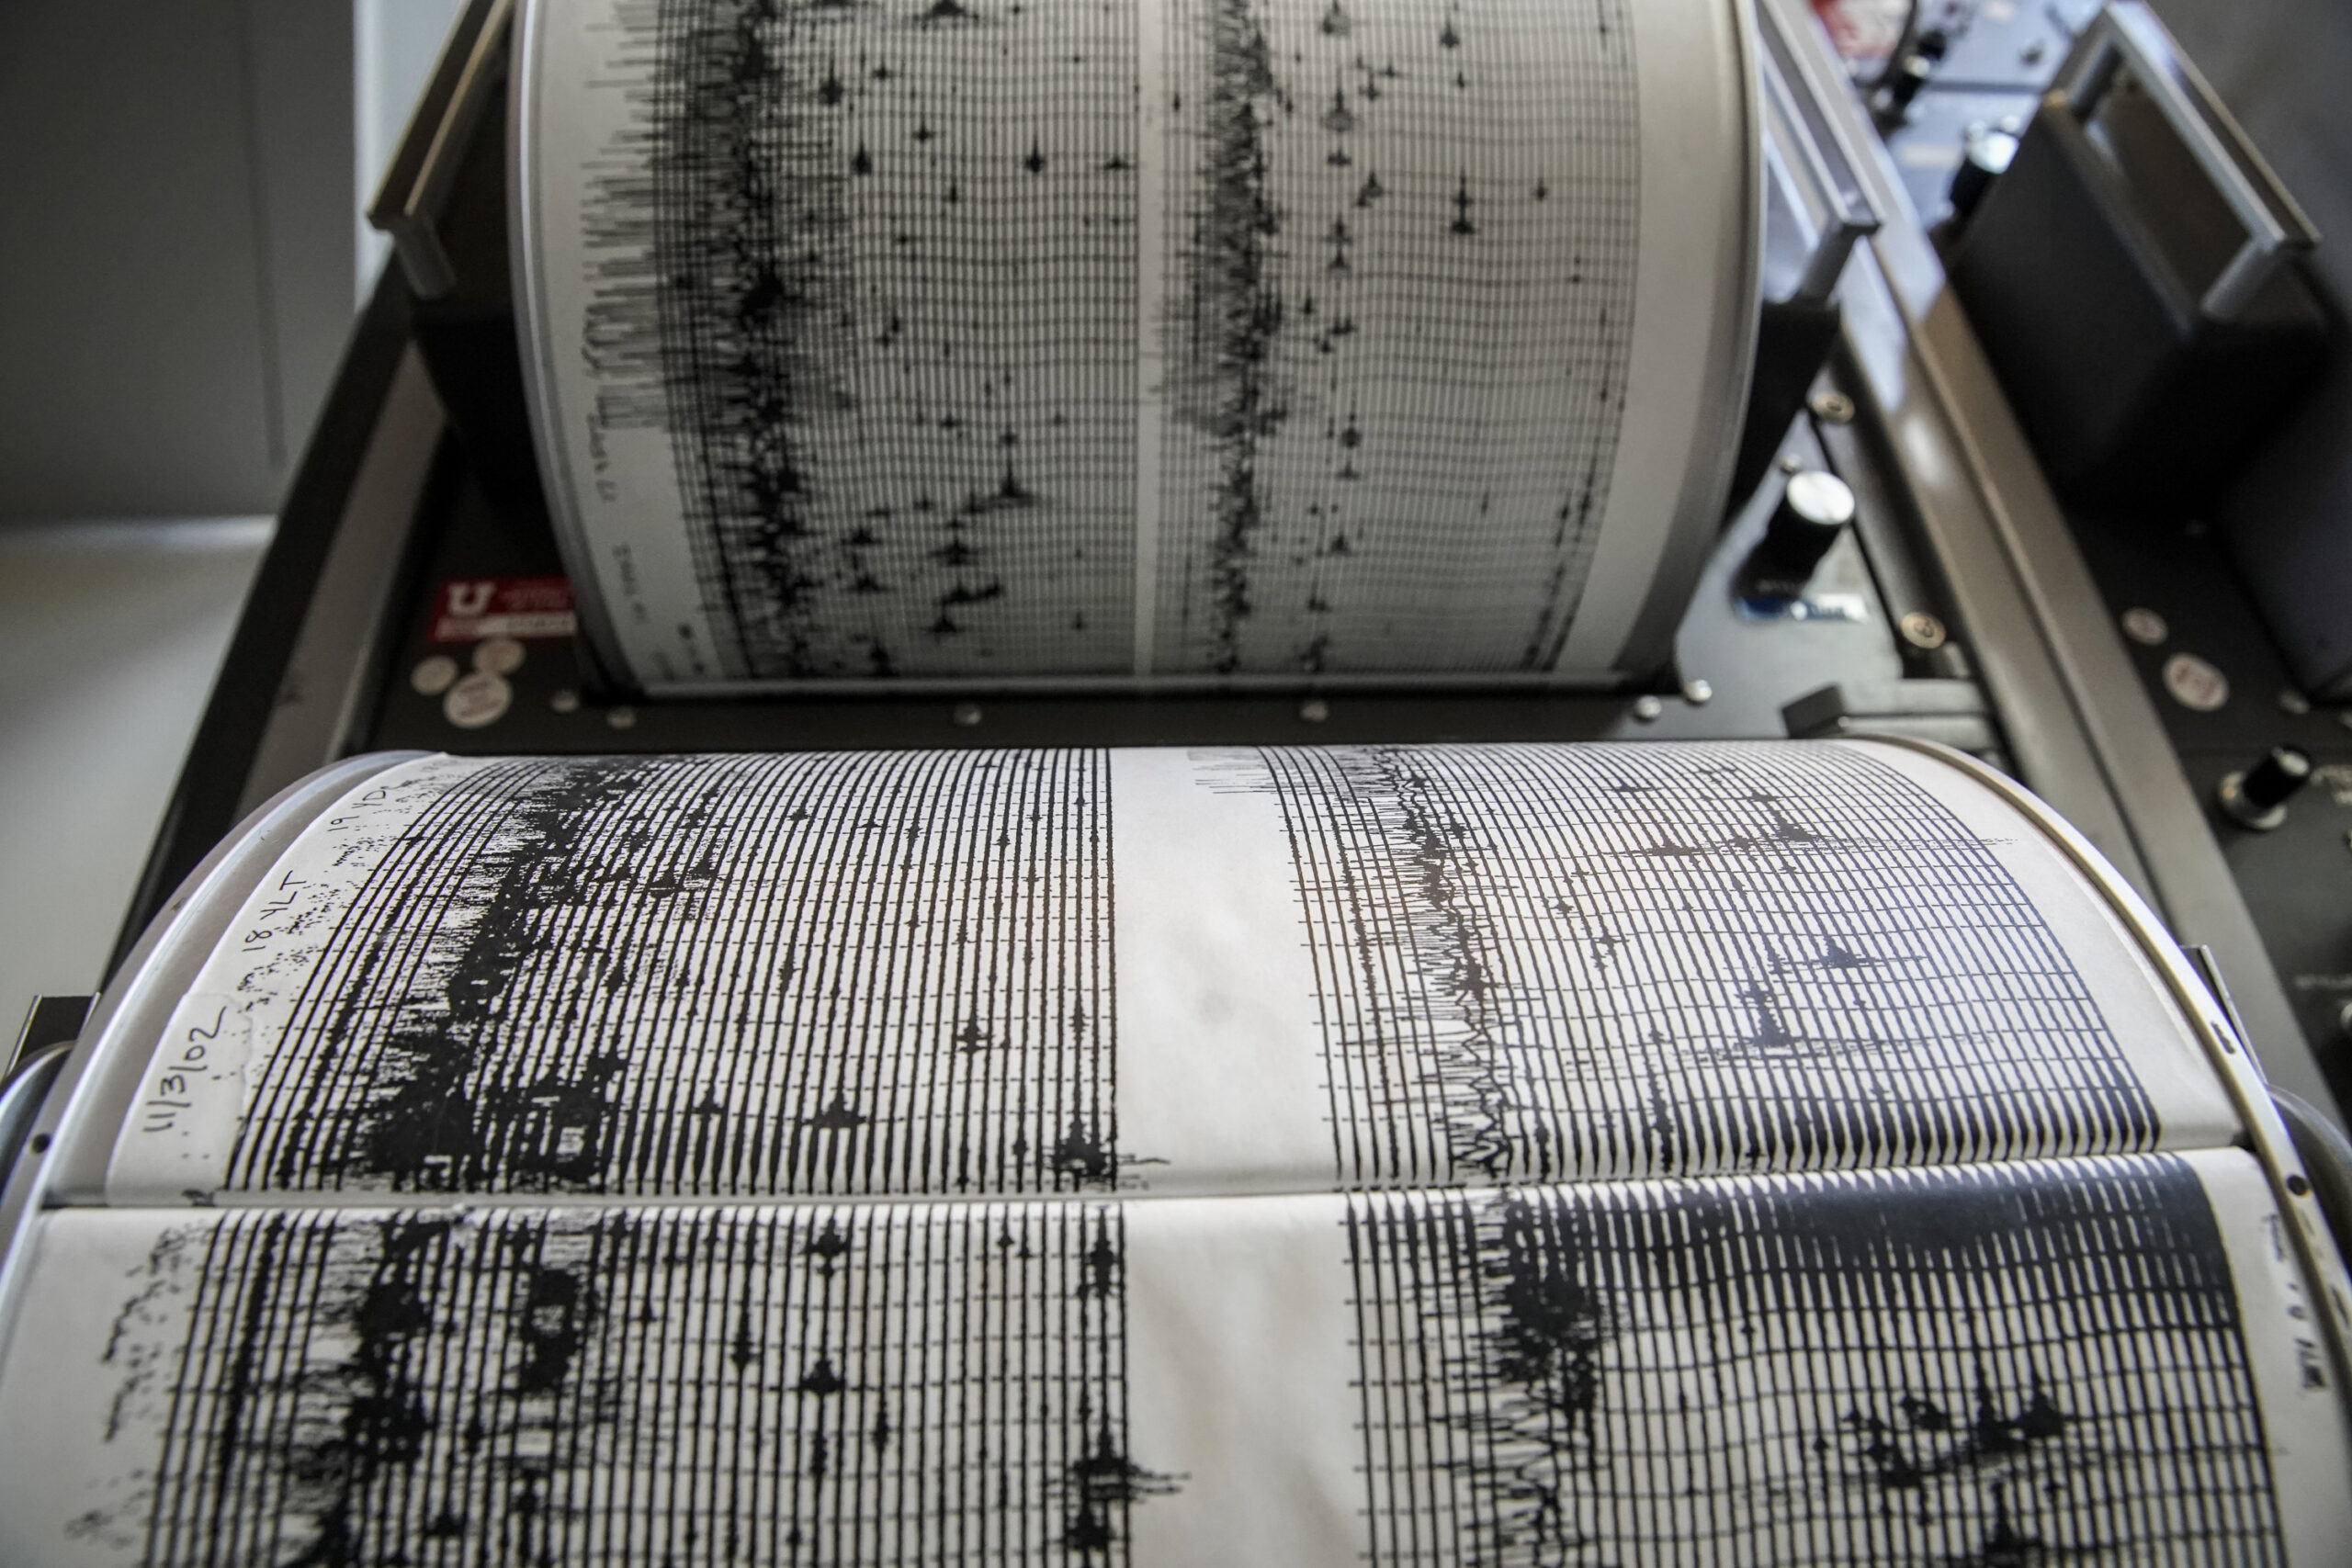 Earthquake shows on Seismometer...